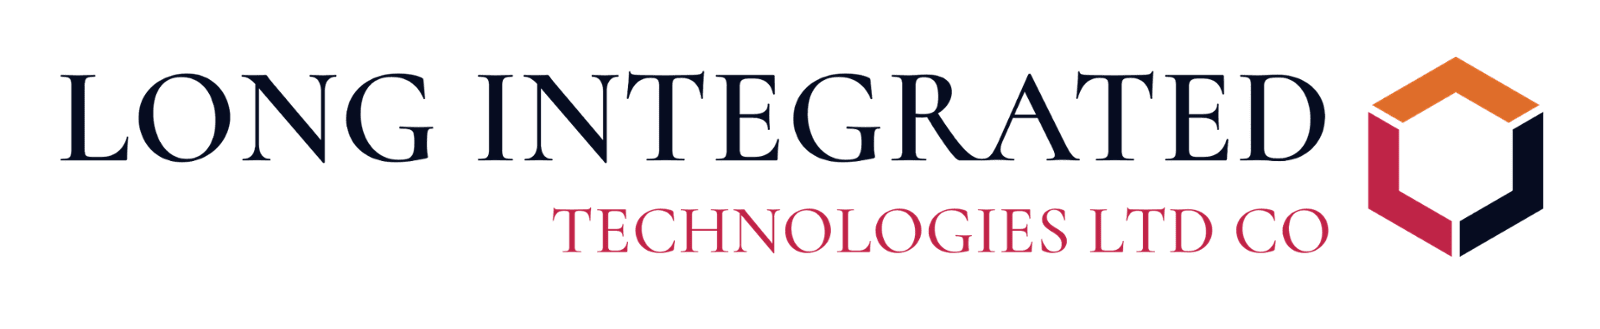 Long Integrated Technologies Ltd Co